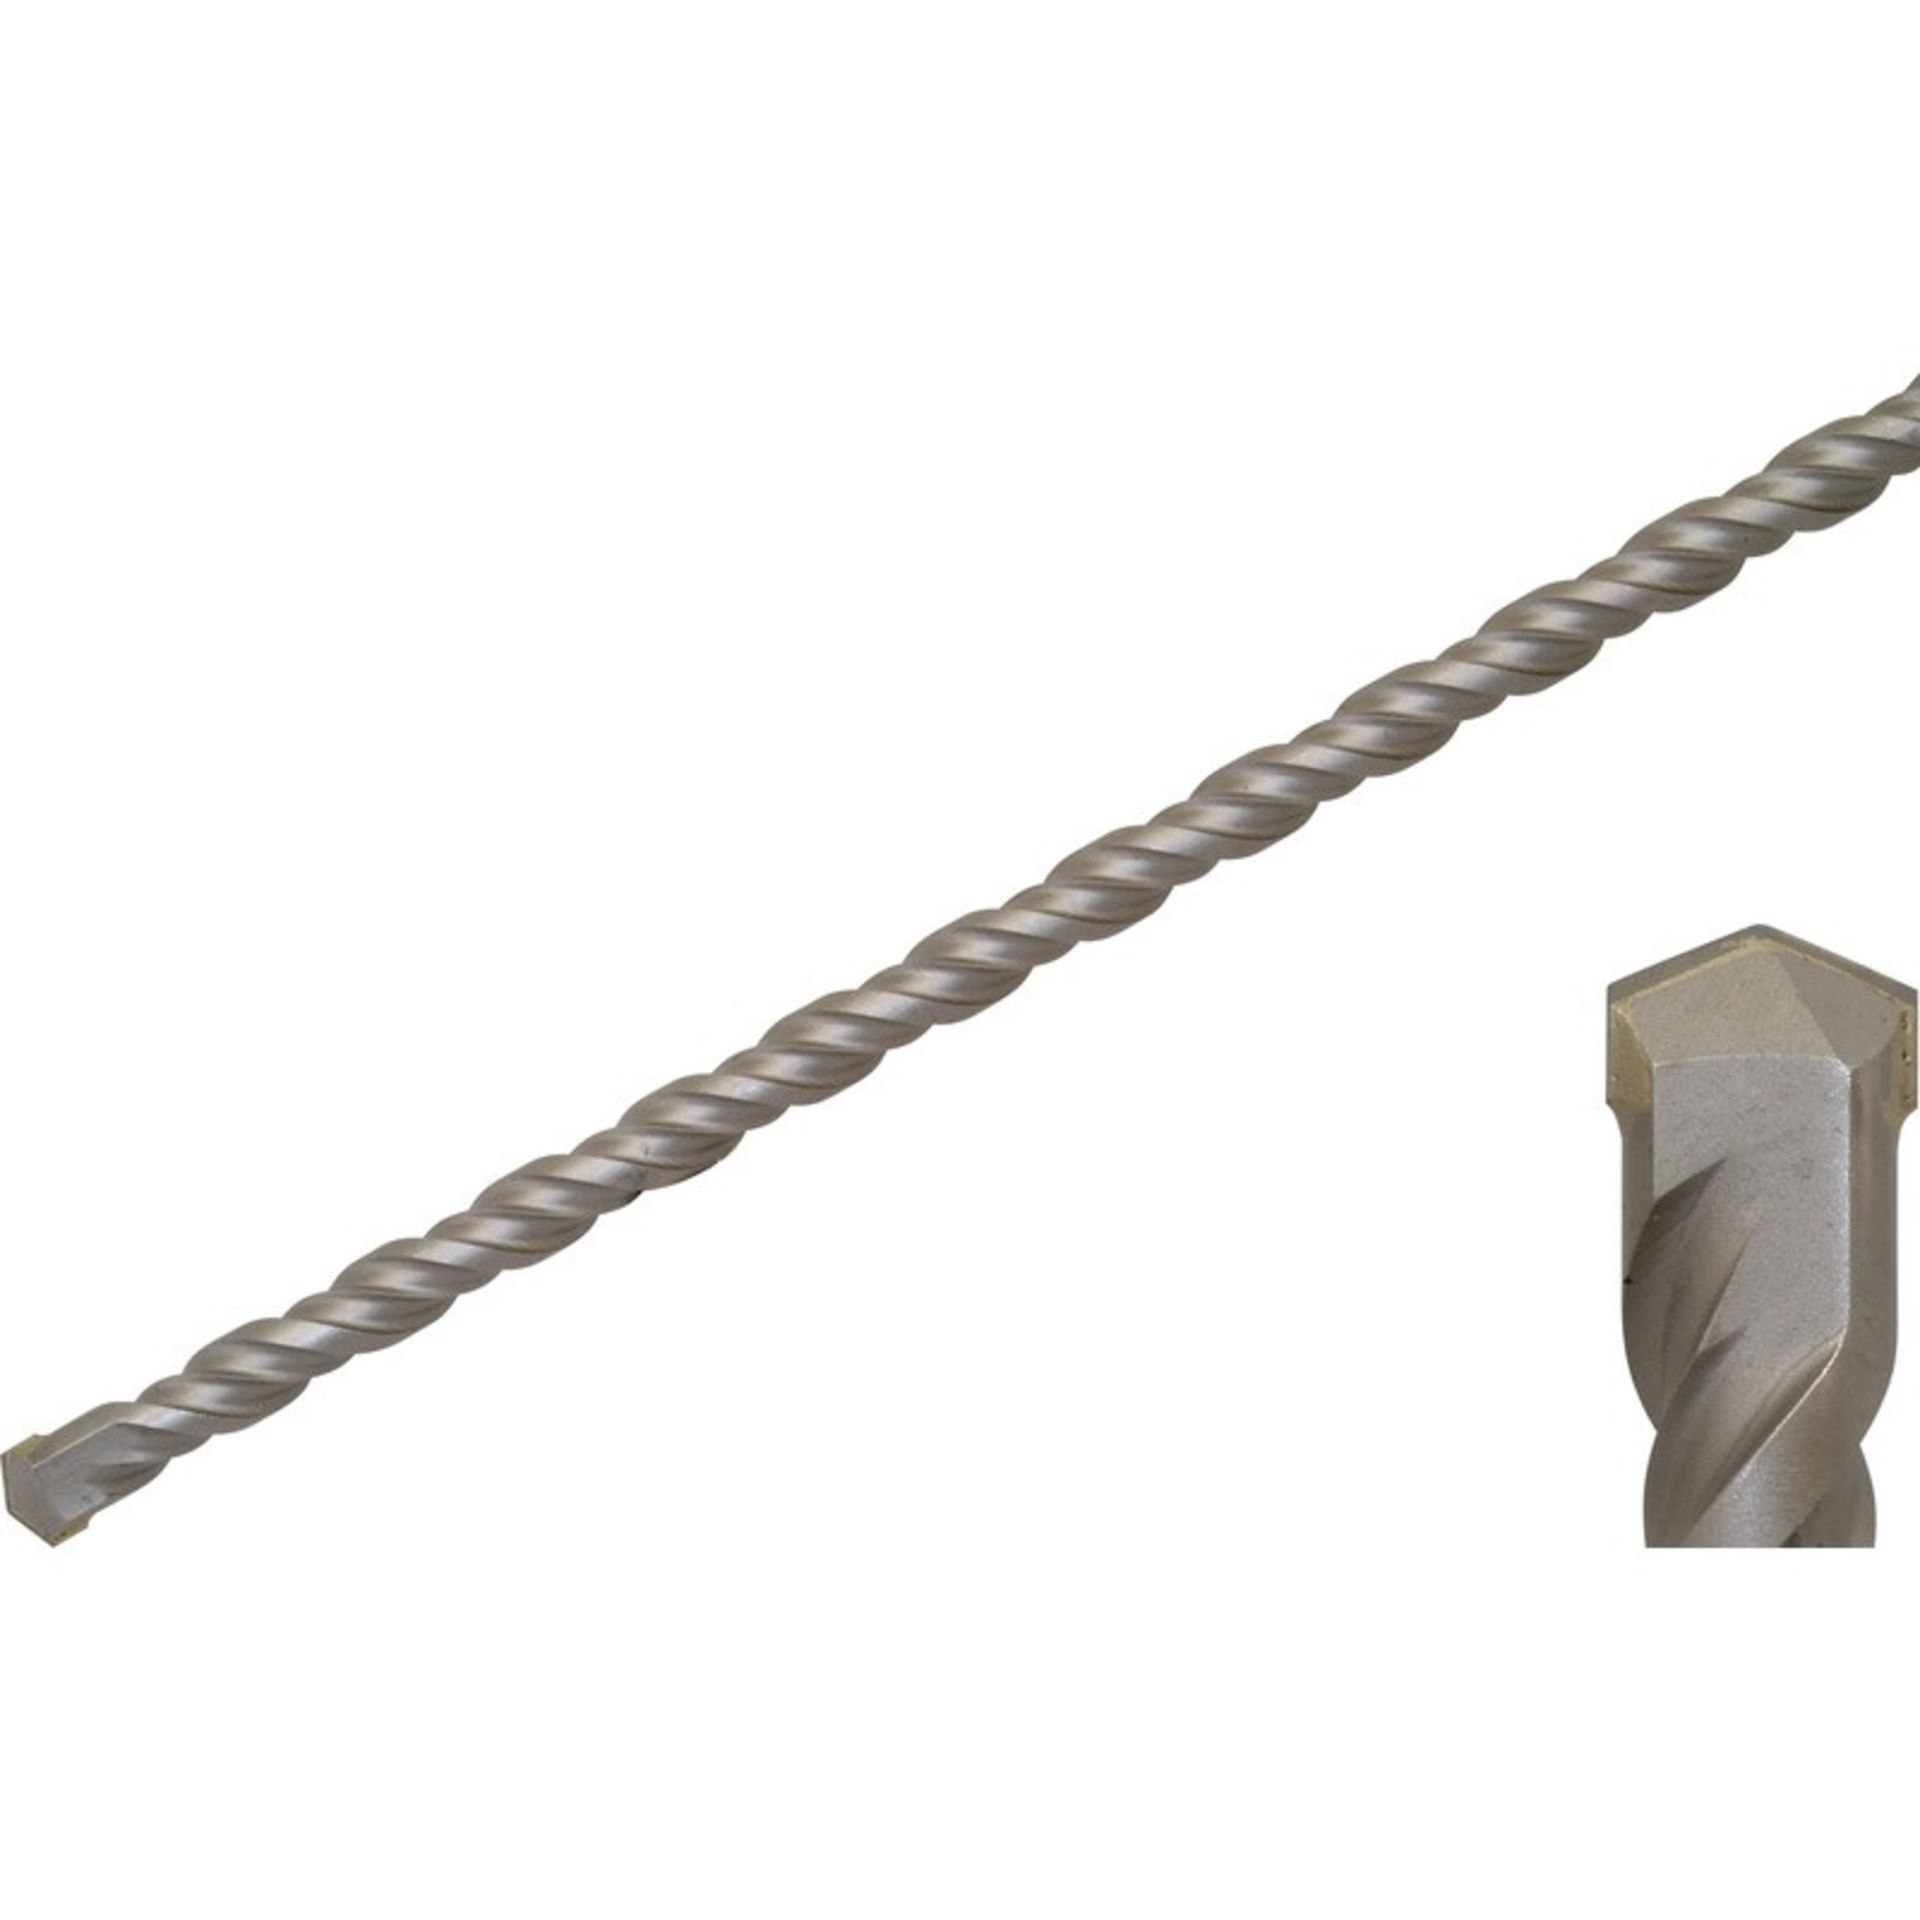 3 x Mexco 14 mm x 460 mm Masonry Hammer Drill Bit Retail 9.99 Each - Image 2 of 2